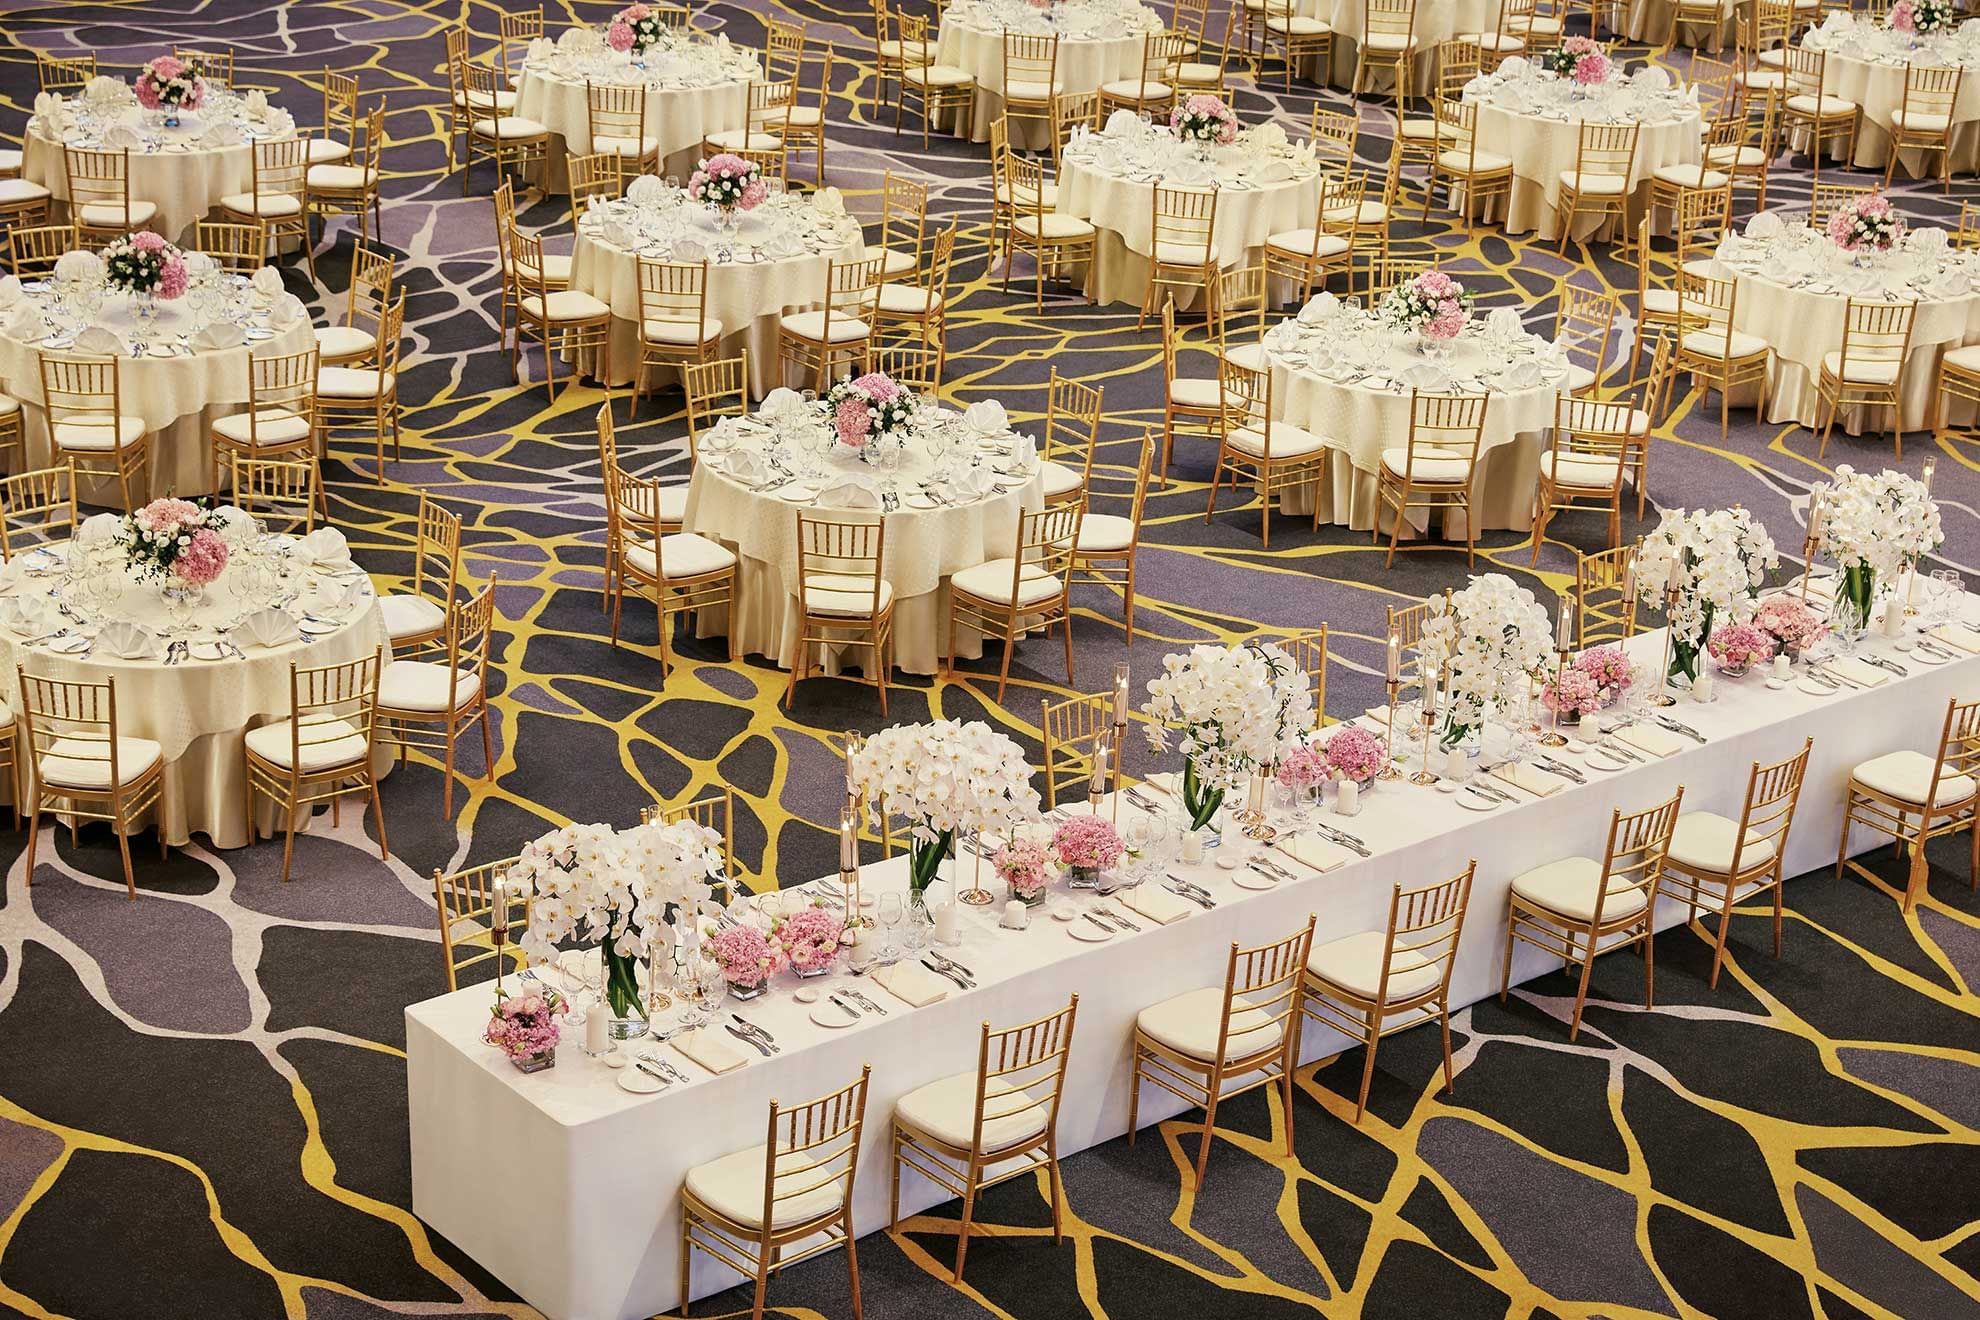 Wedding dining set-up in the Grand Ballroom at Sunway Resort